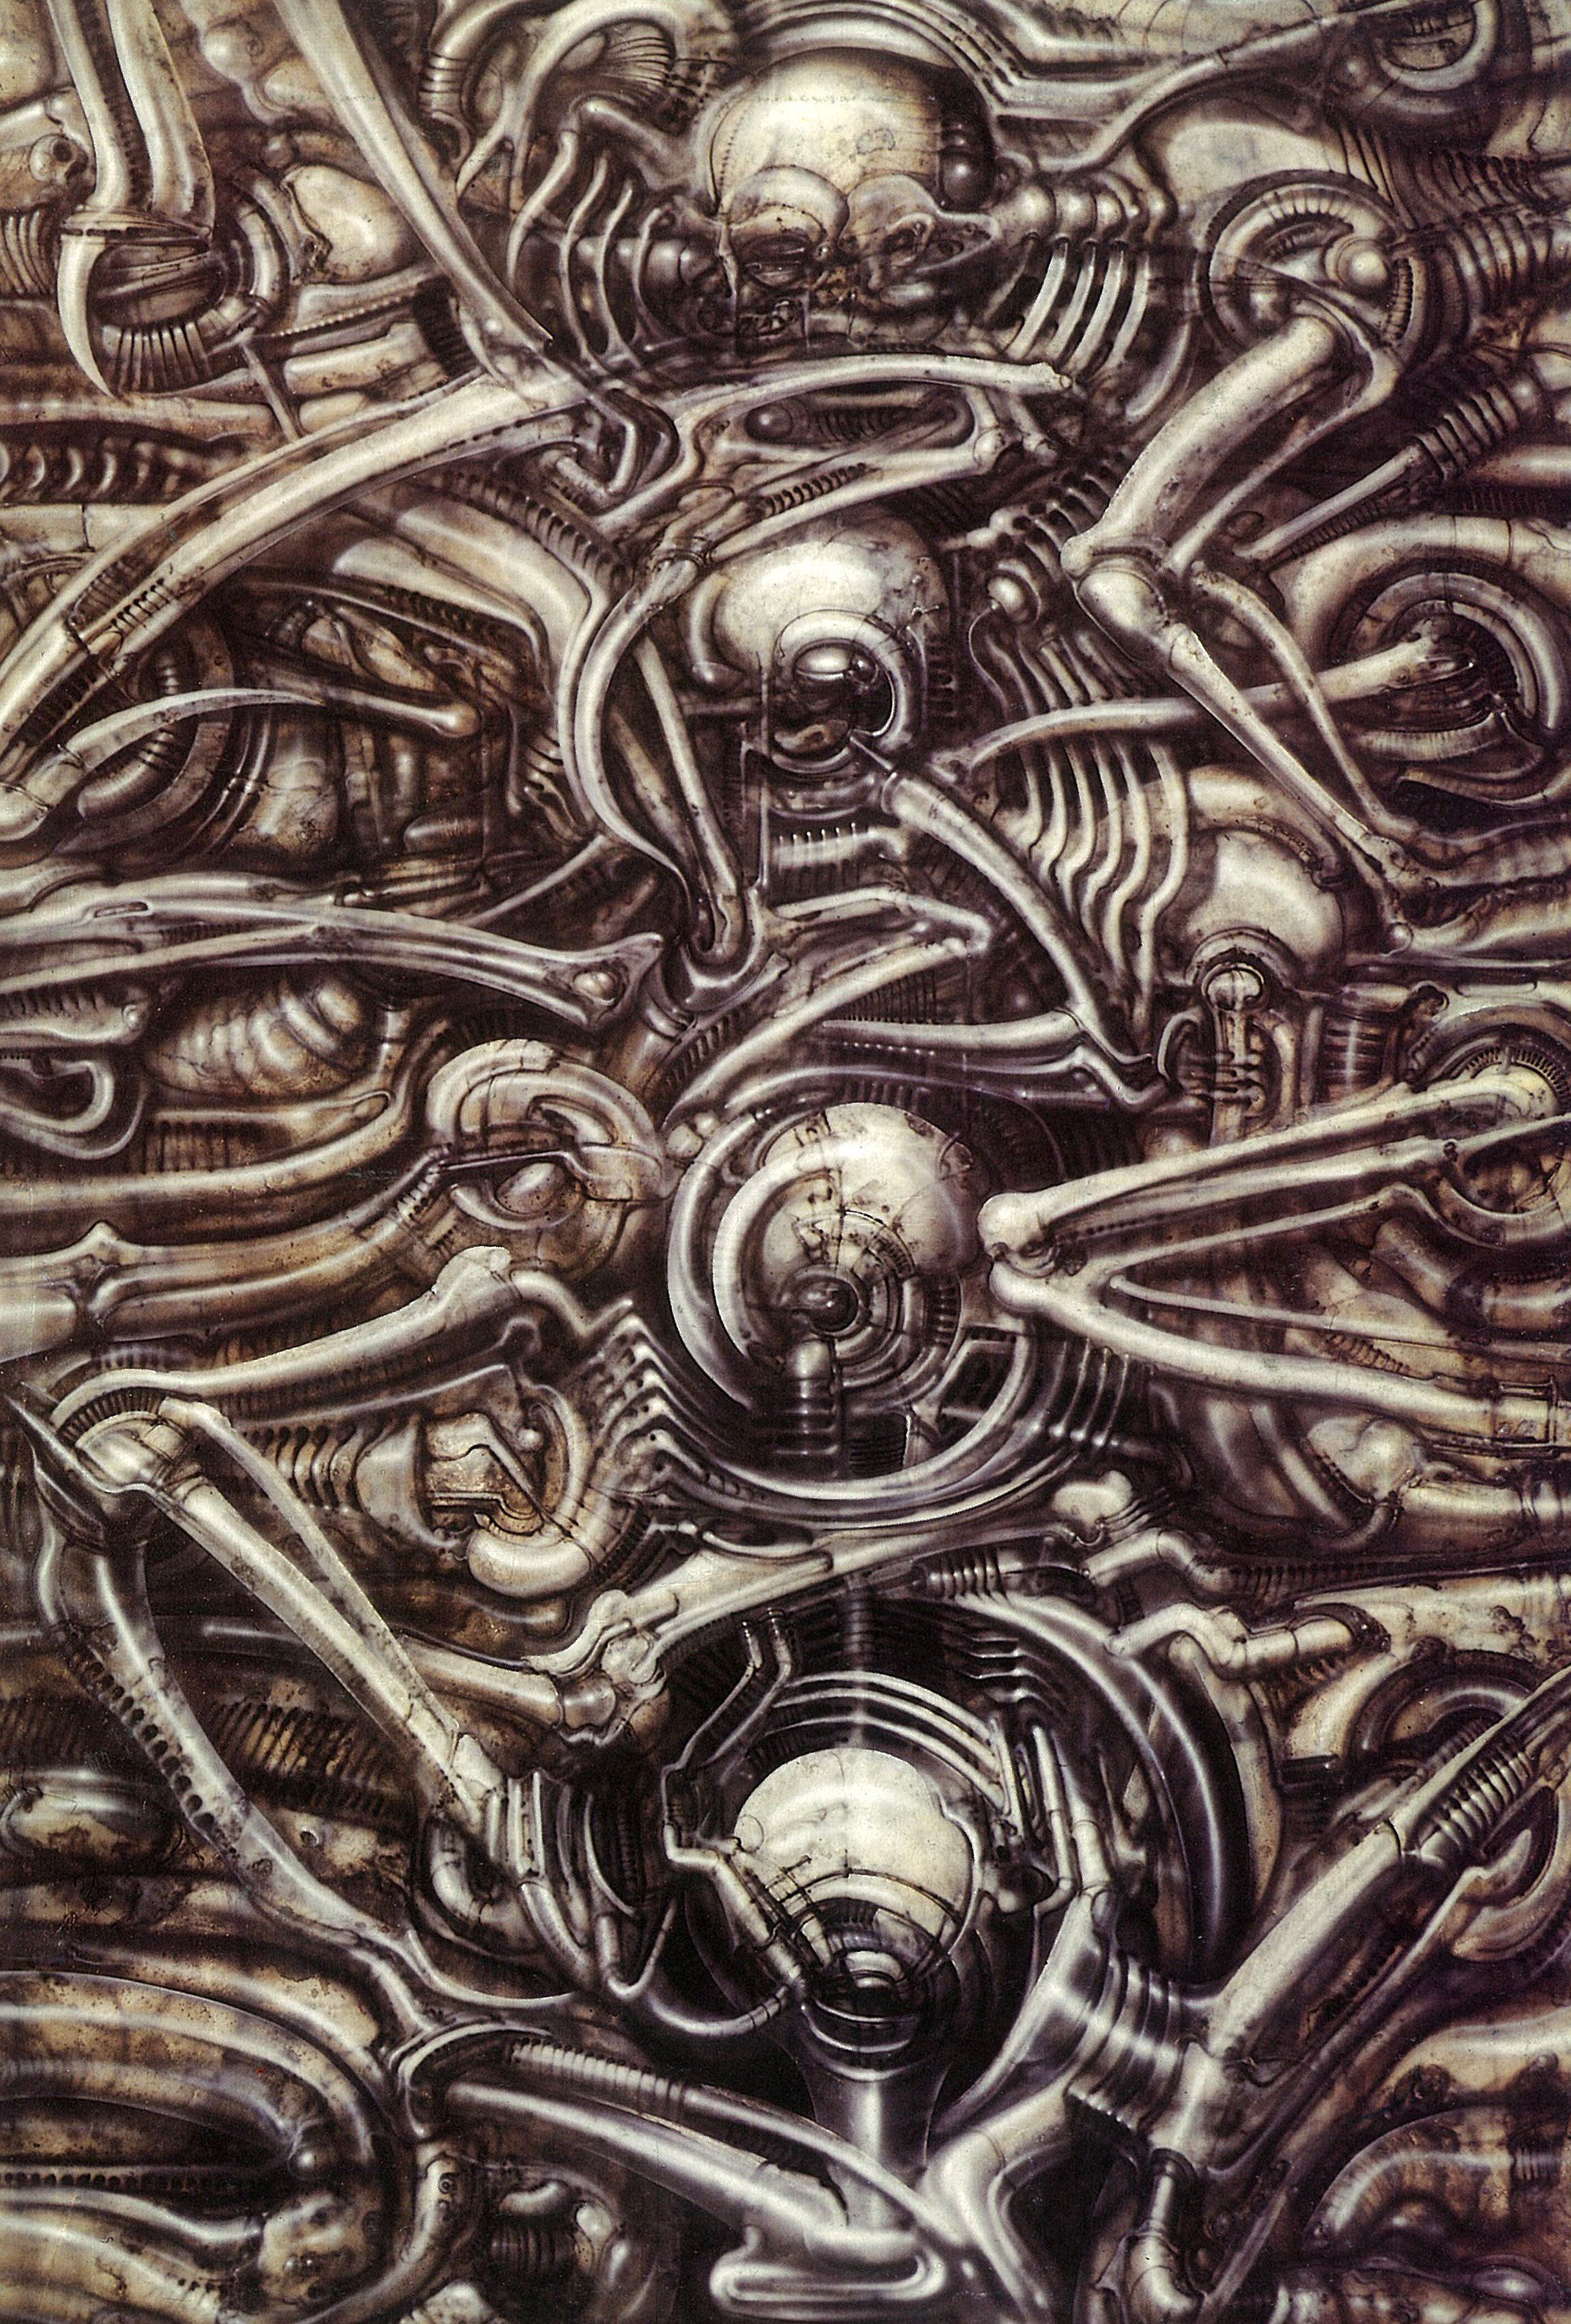 H R GIGER Art Artwork Dark Evil Artistic Horror Fantasy Sci Fi